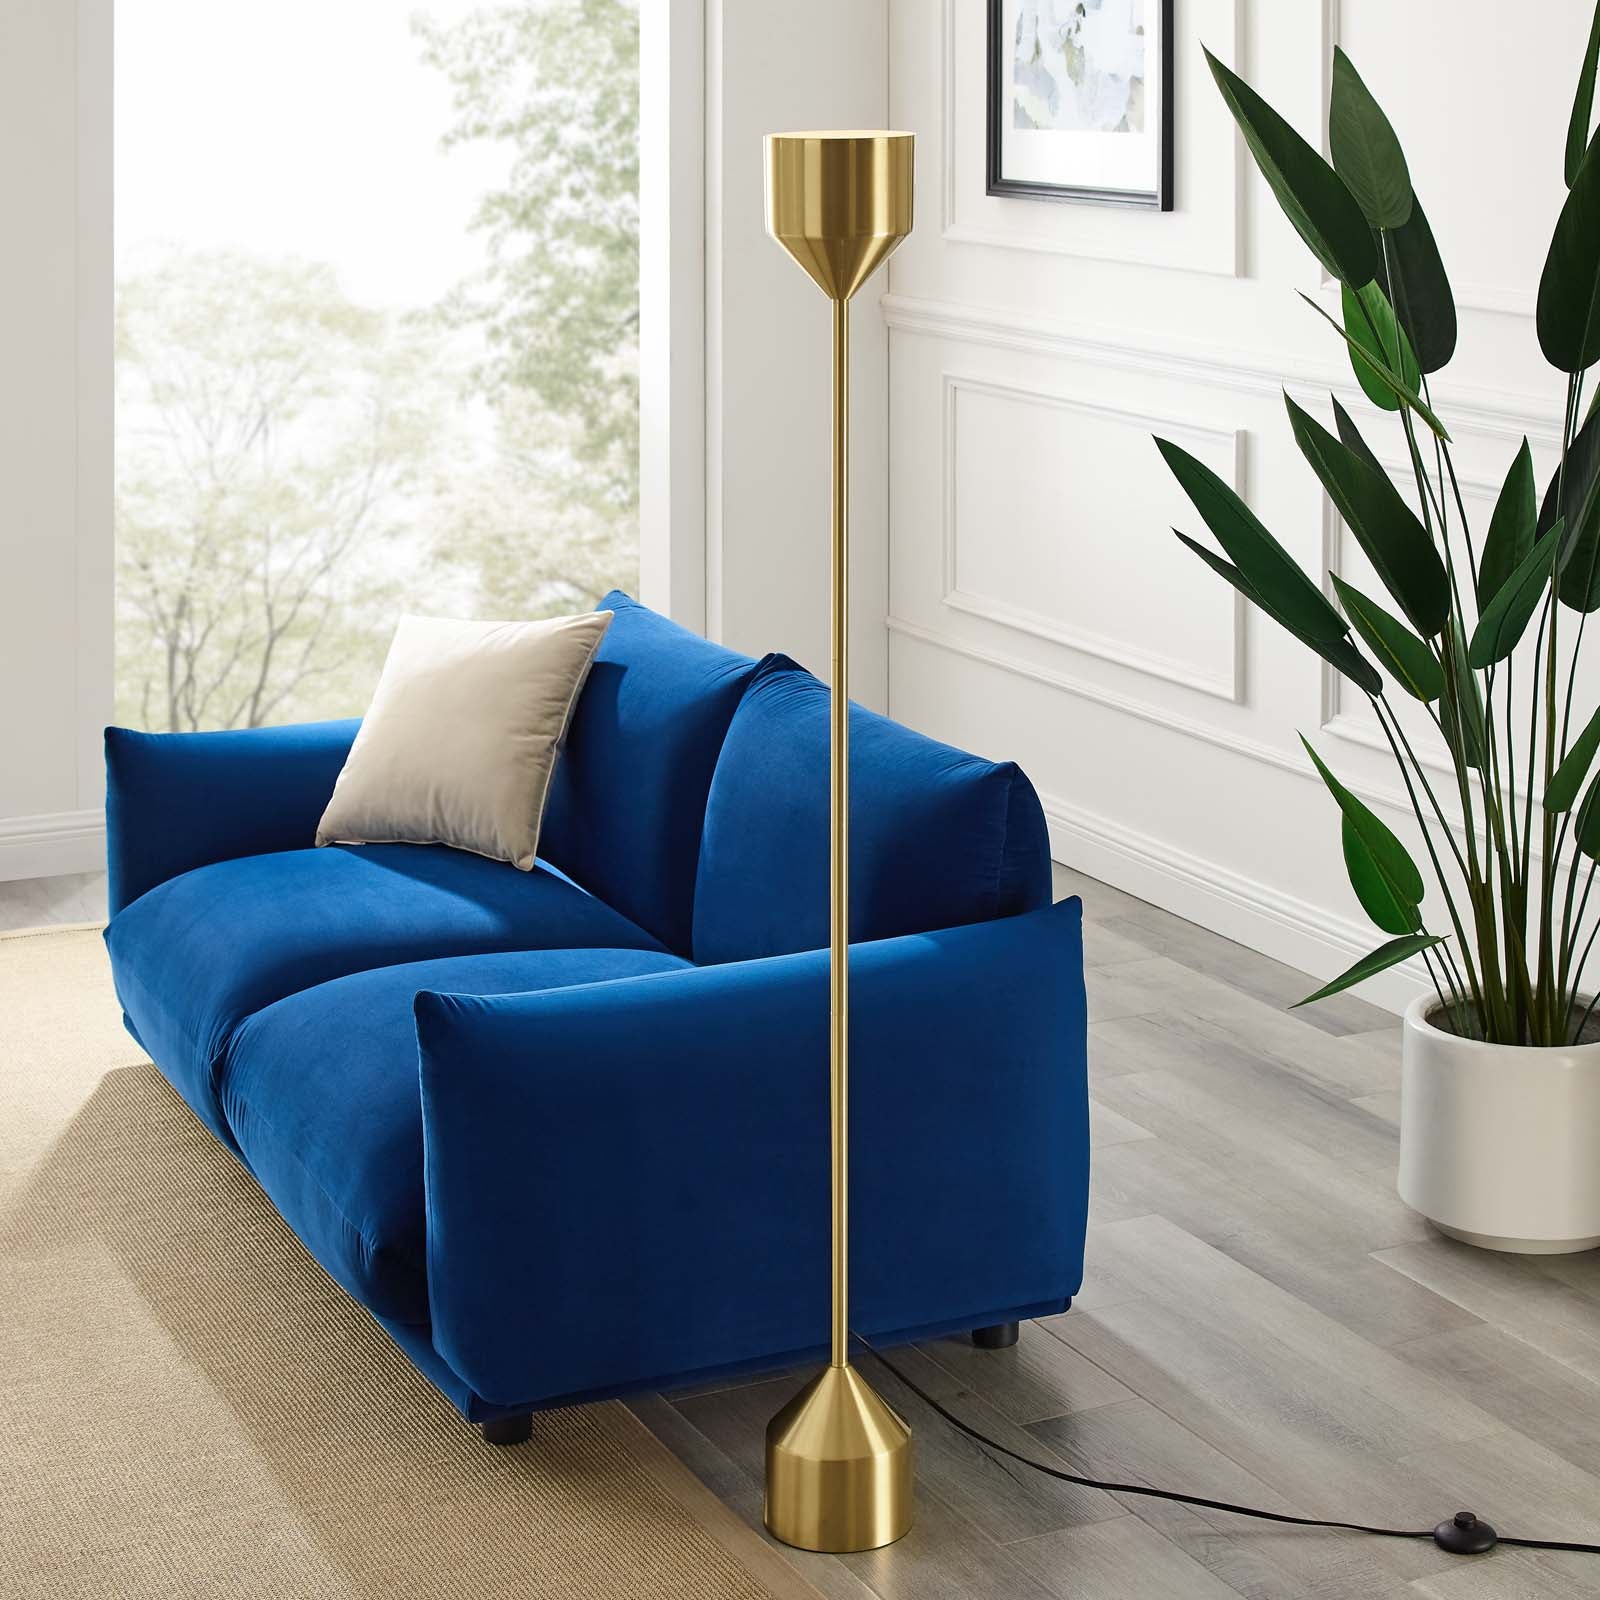 Kara Standing Floor Lamp - East Shore Modern Home Furnishings